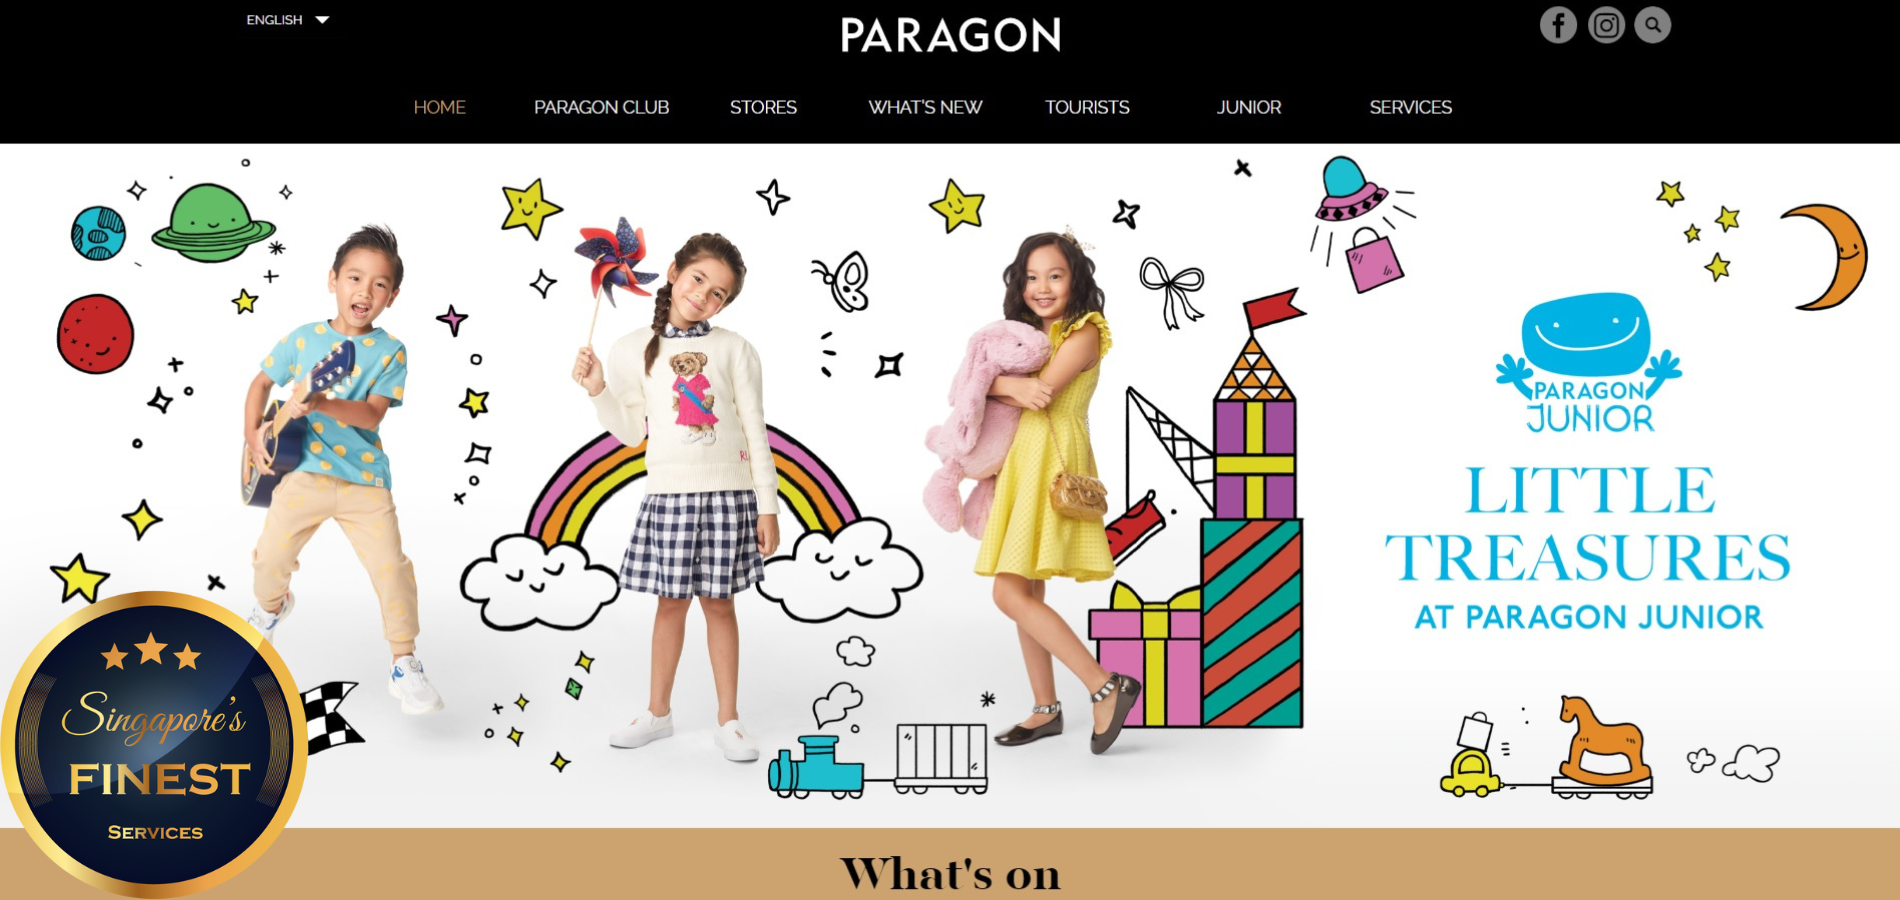 Paragon Shopping Center - Shopping Malls Singapore